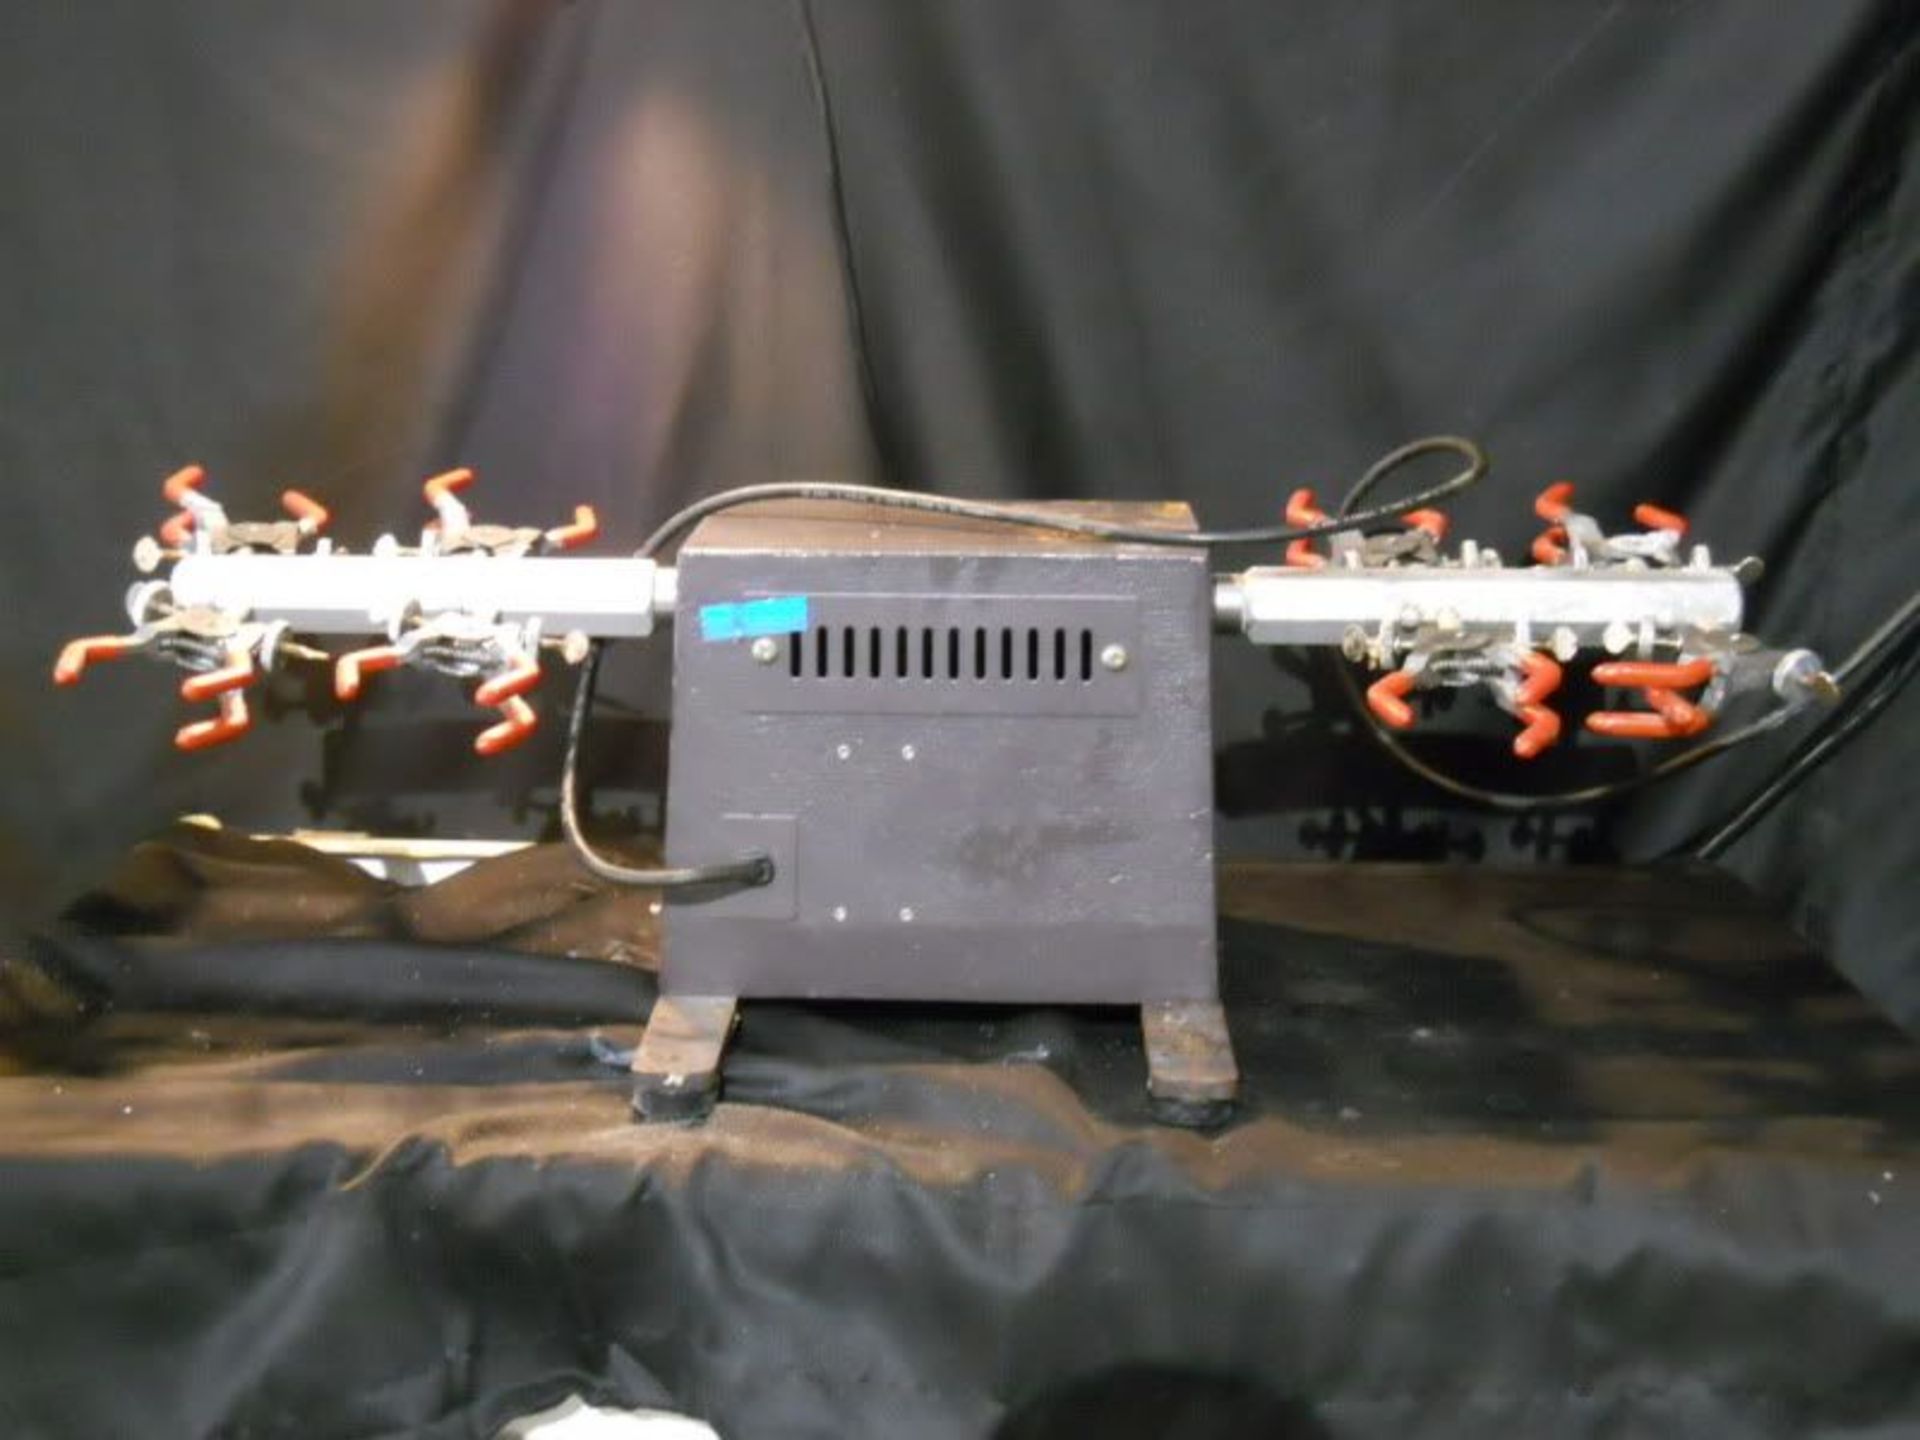 Lab-Line Multi-Wrist Shaker Model 3587, Qty 1, 220974684469 - Image 6 of 8